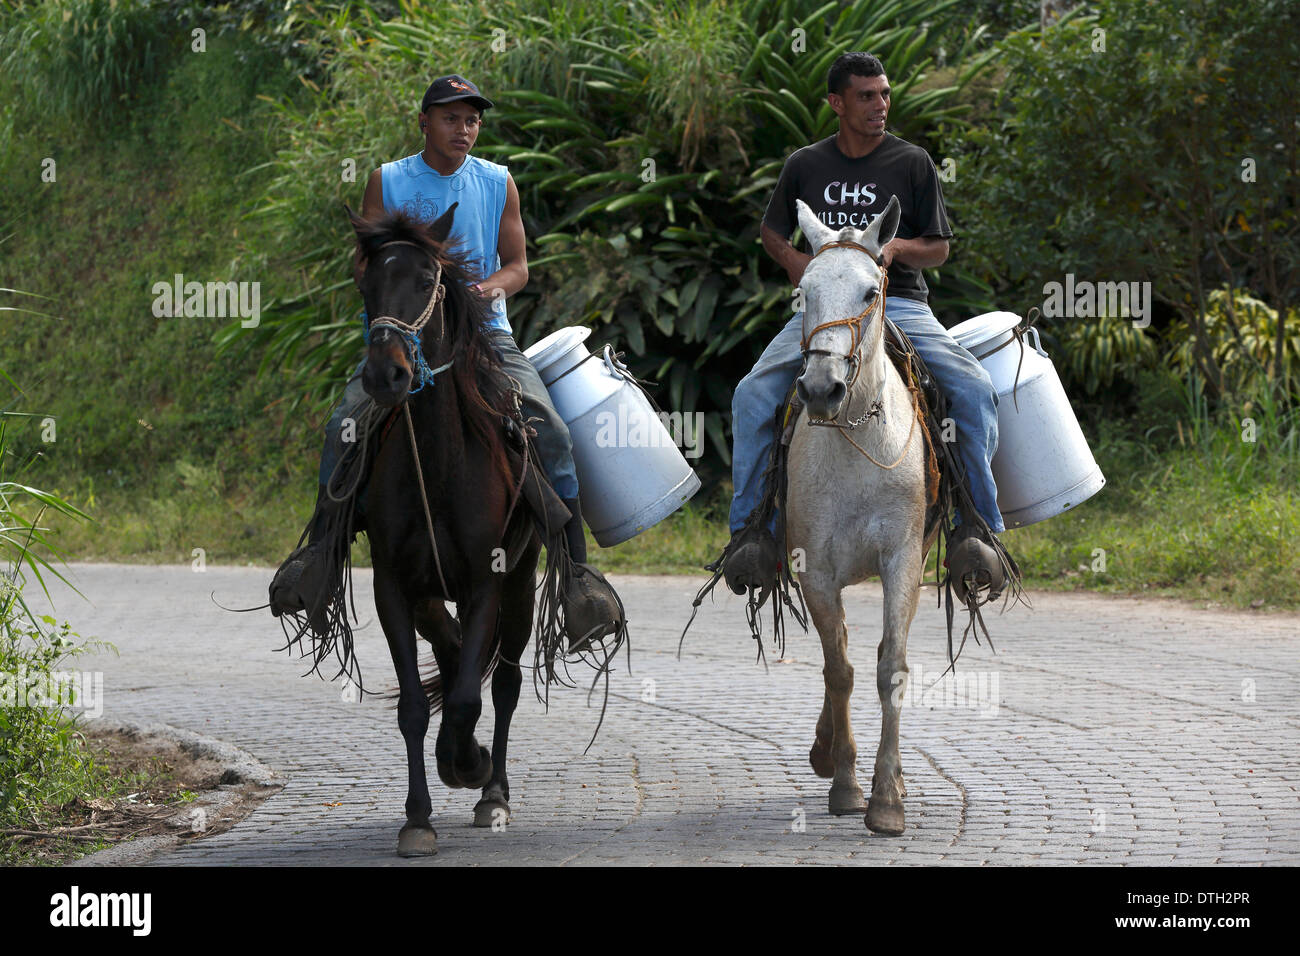 Men on horses, Nicaragua Stock Photo